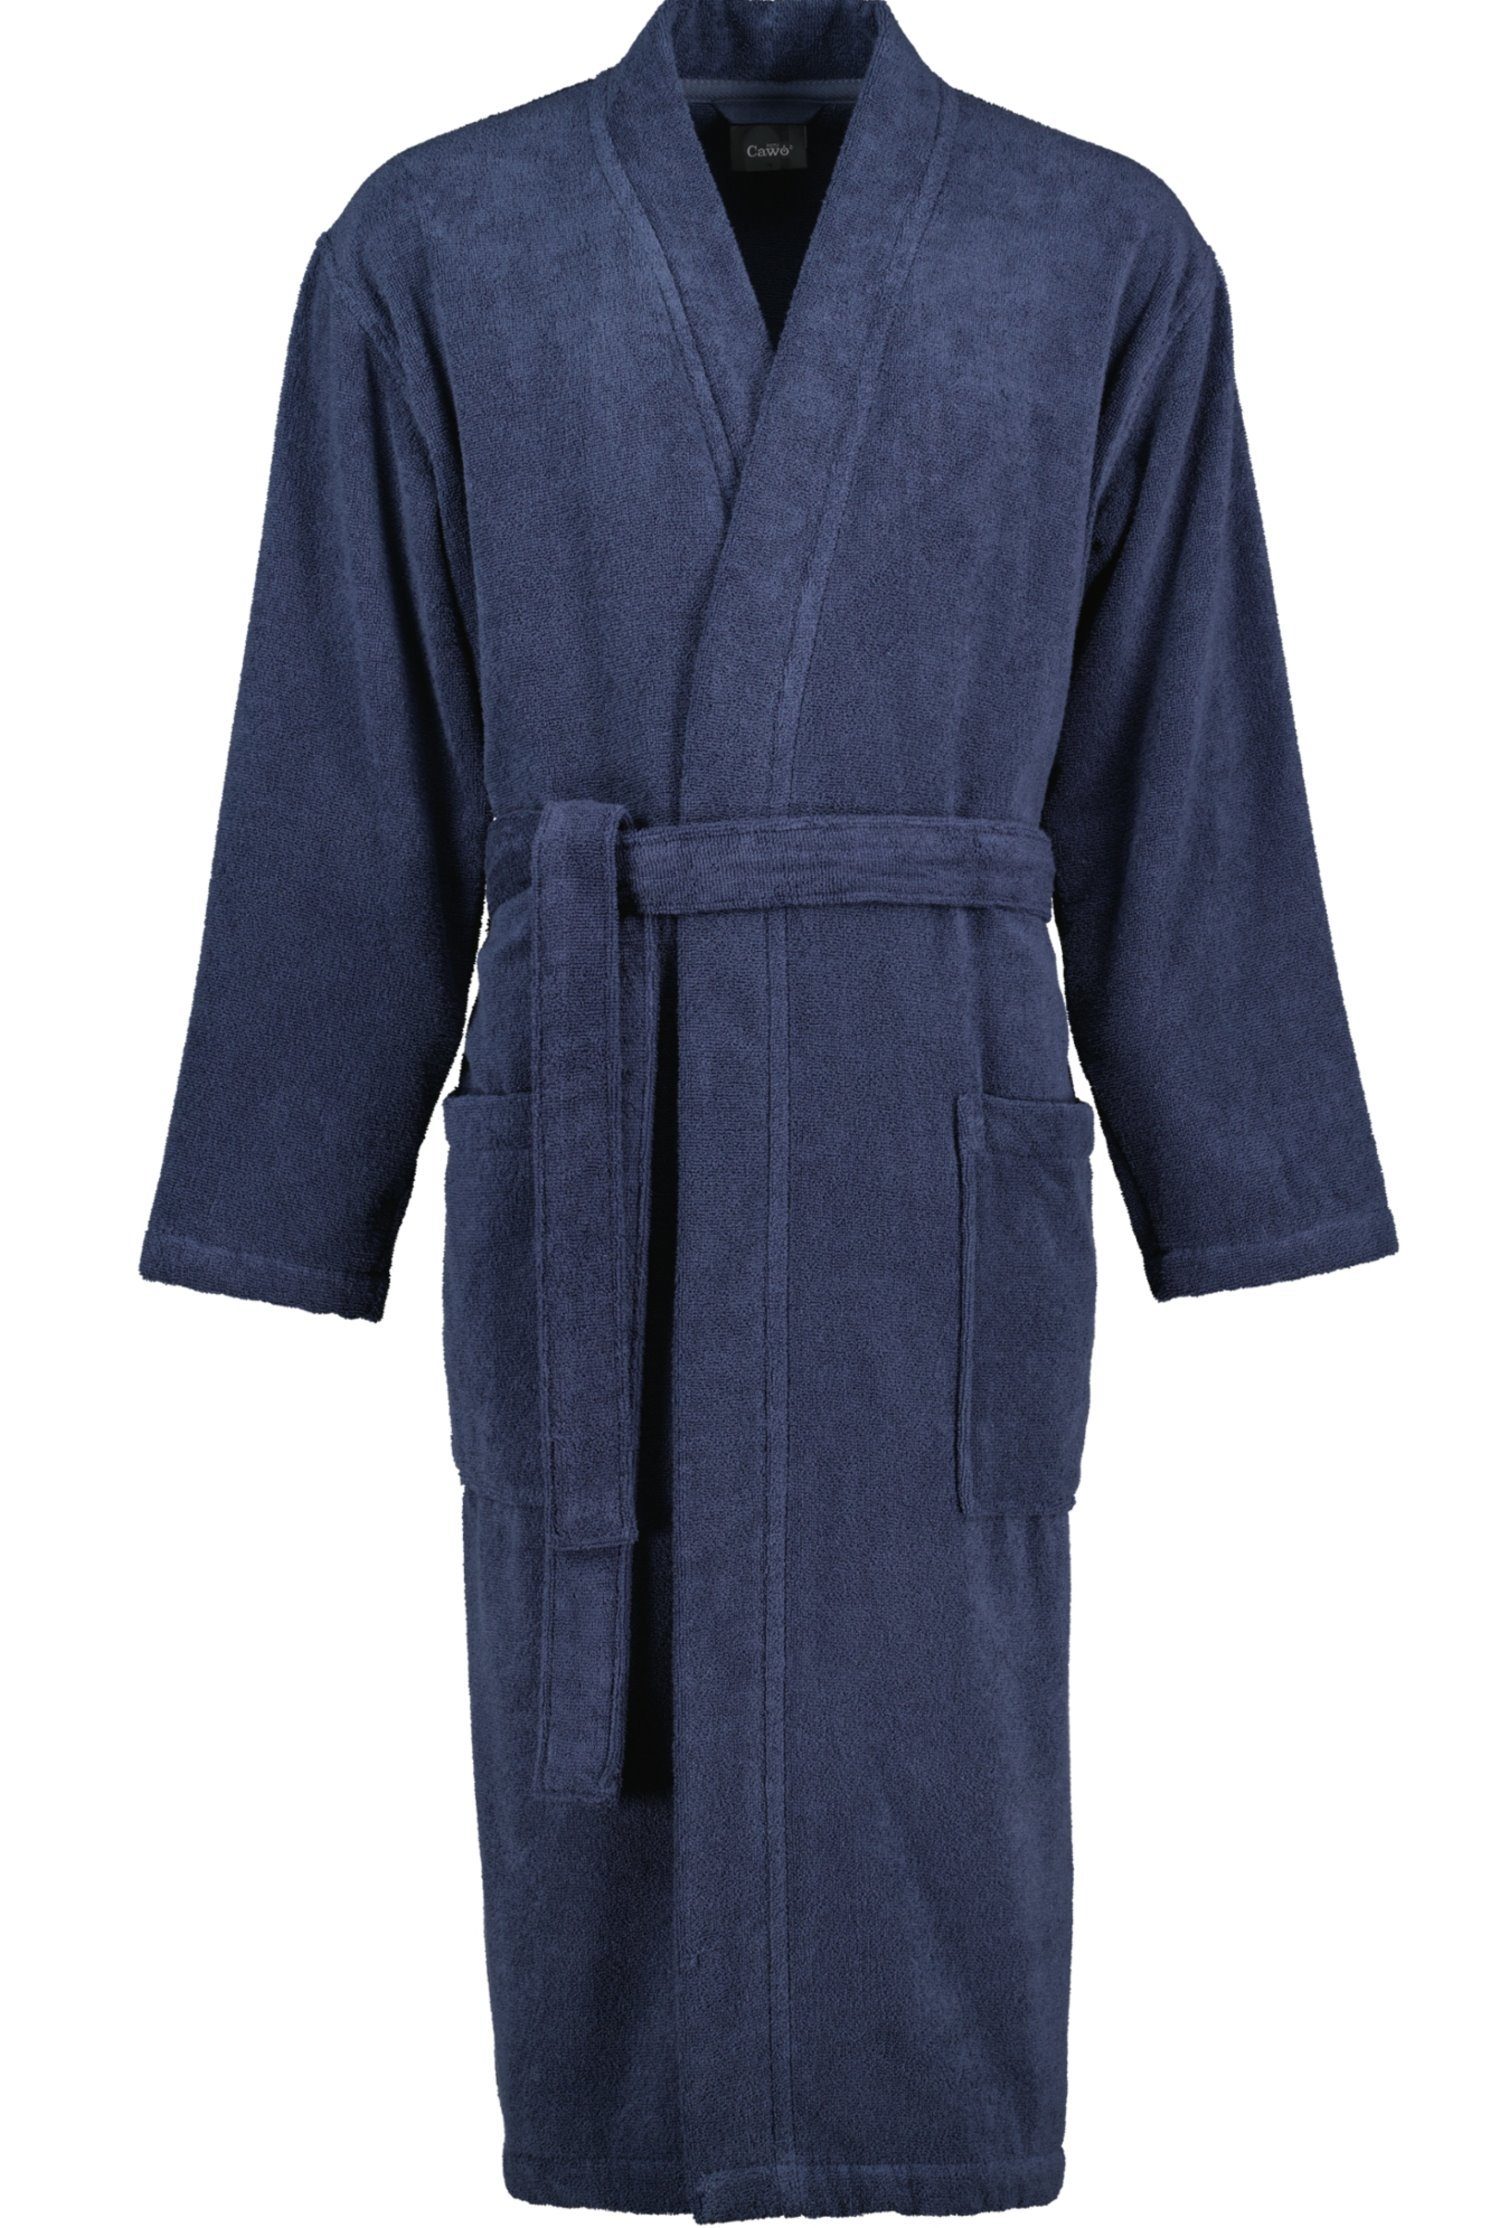 Kimono Uni Home 100% Zeitloses Herrenbademantel Frottier, Baumwolle, 828 Kimono, Cawö Uni-Design